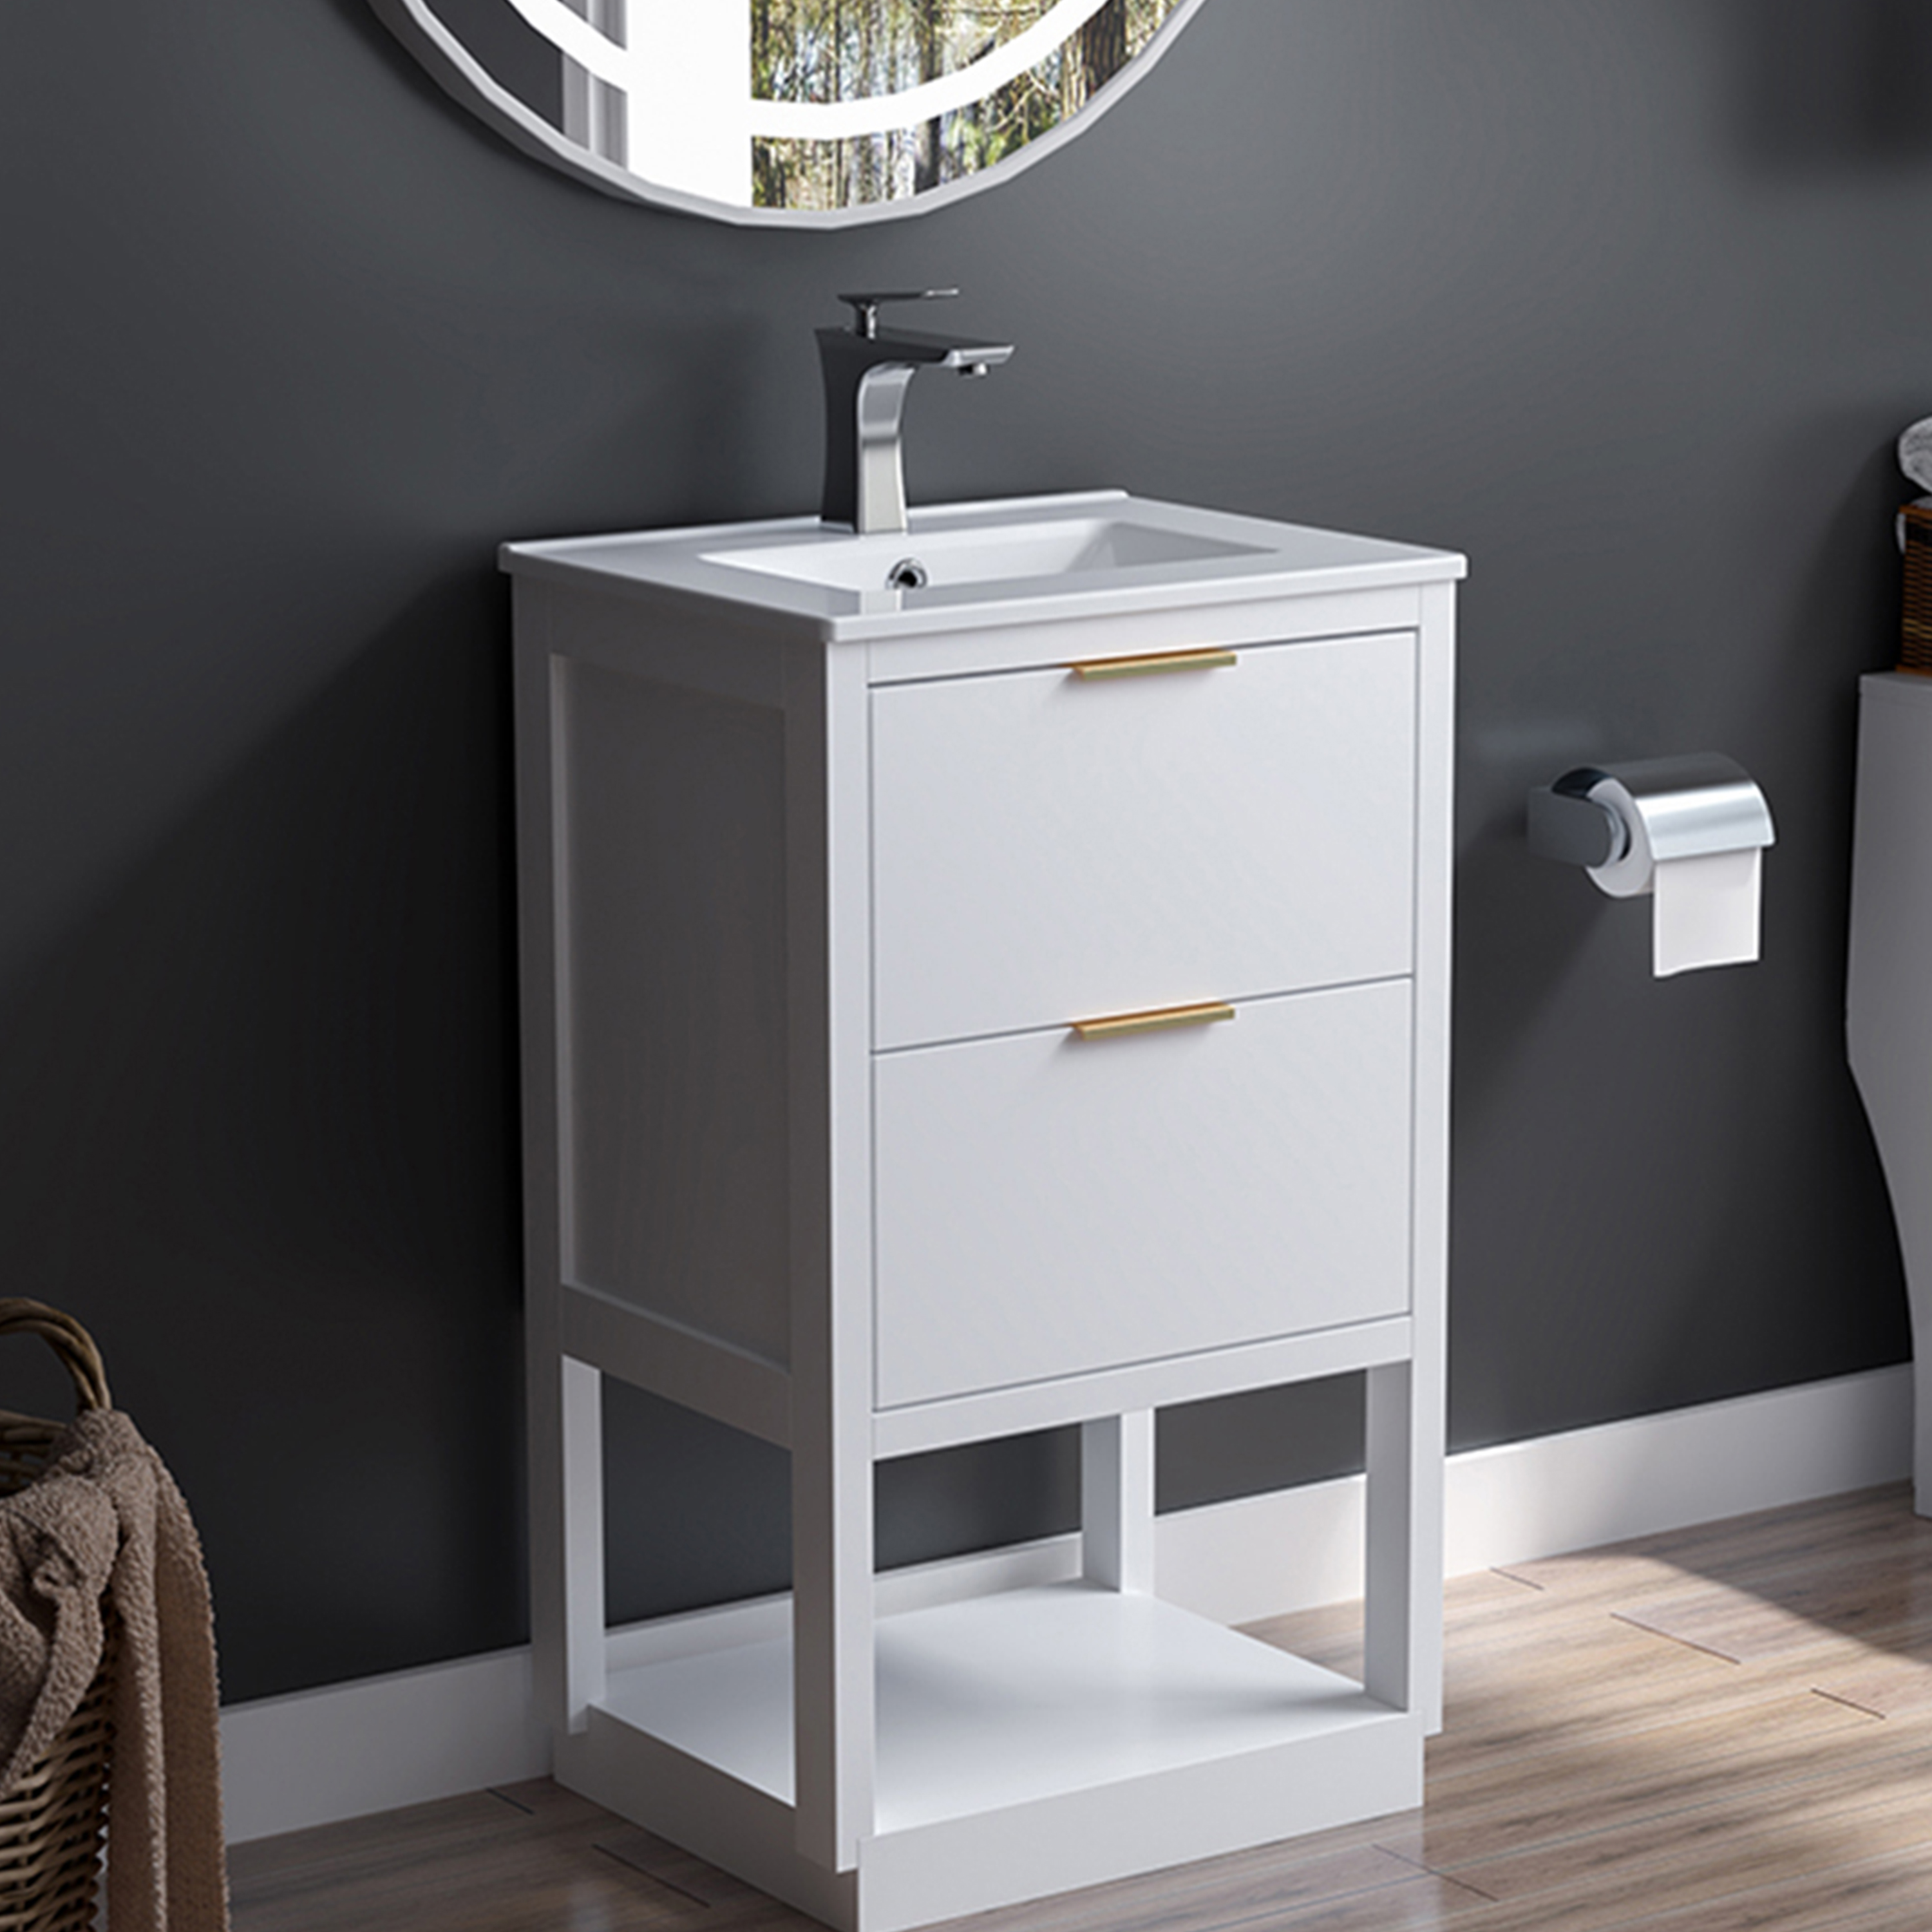 MEJE #S05B – 20 inch Single Sink Bathroom Vanity Set with Ceramic Undermount Vessel Sink for Small Space, Modern Storage Cabinet Set, White